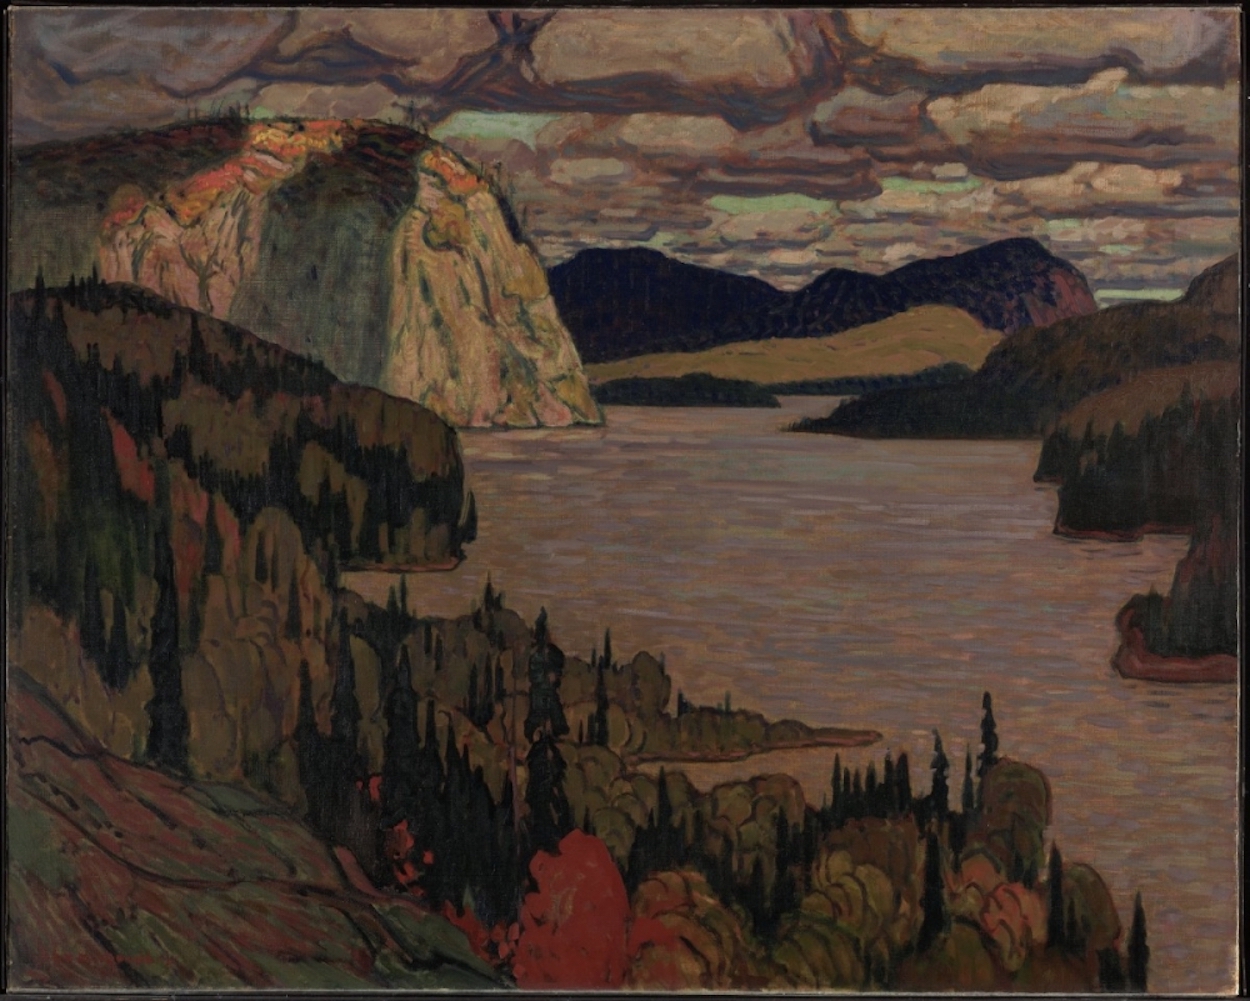 Görkemli Topraklar by J.E.H. MacDonald - 1921 - 122.5 x 153.5 cm 